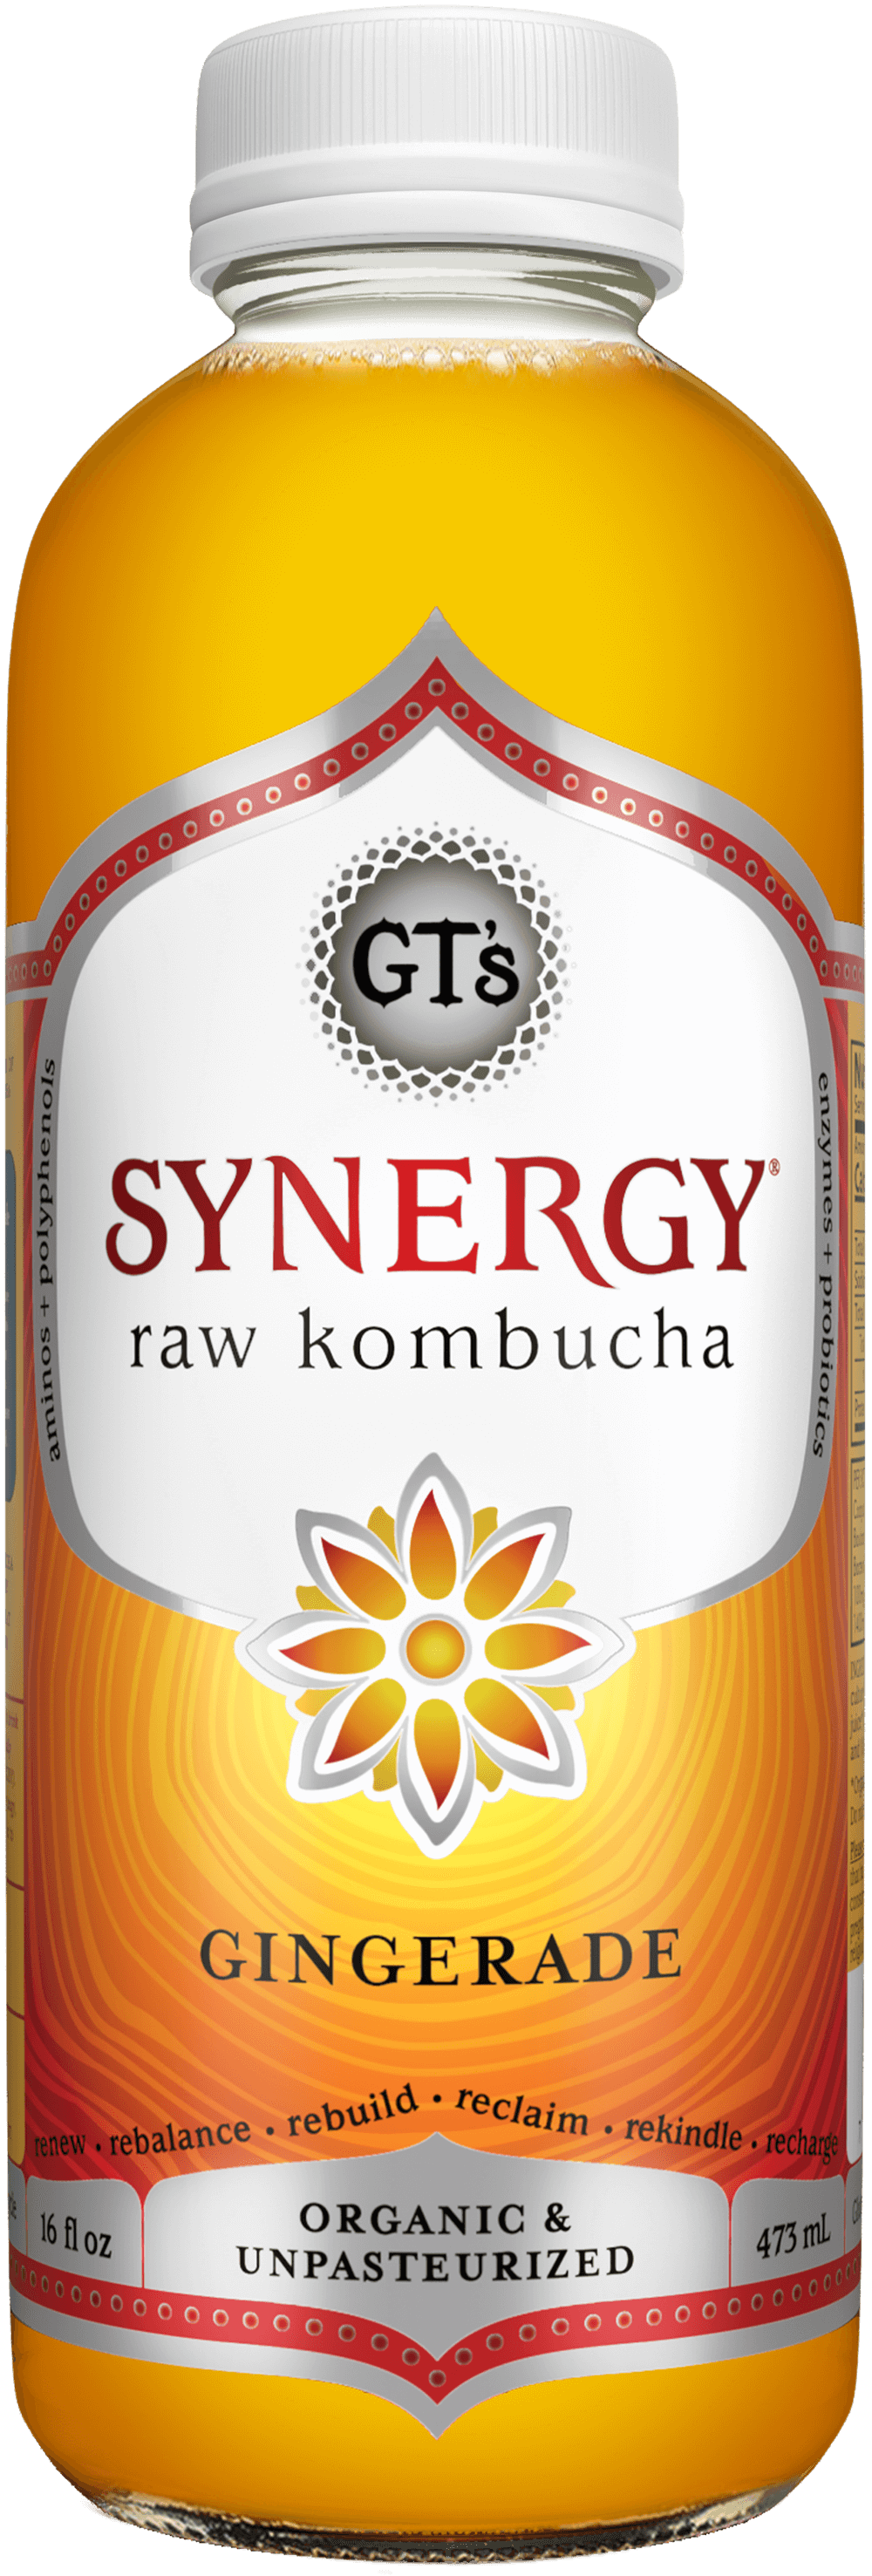 GT's Synergy Kombucha Gingerade 6 units per case 16.0 fl